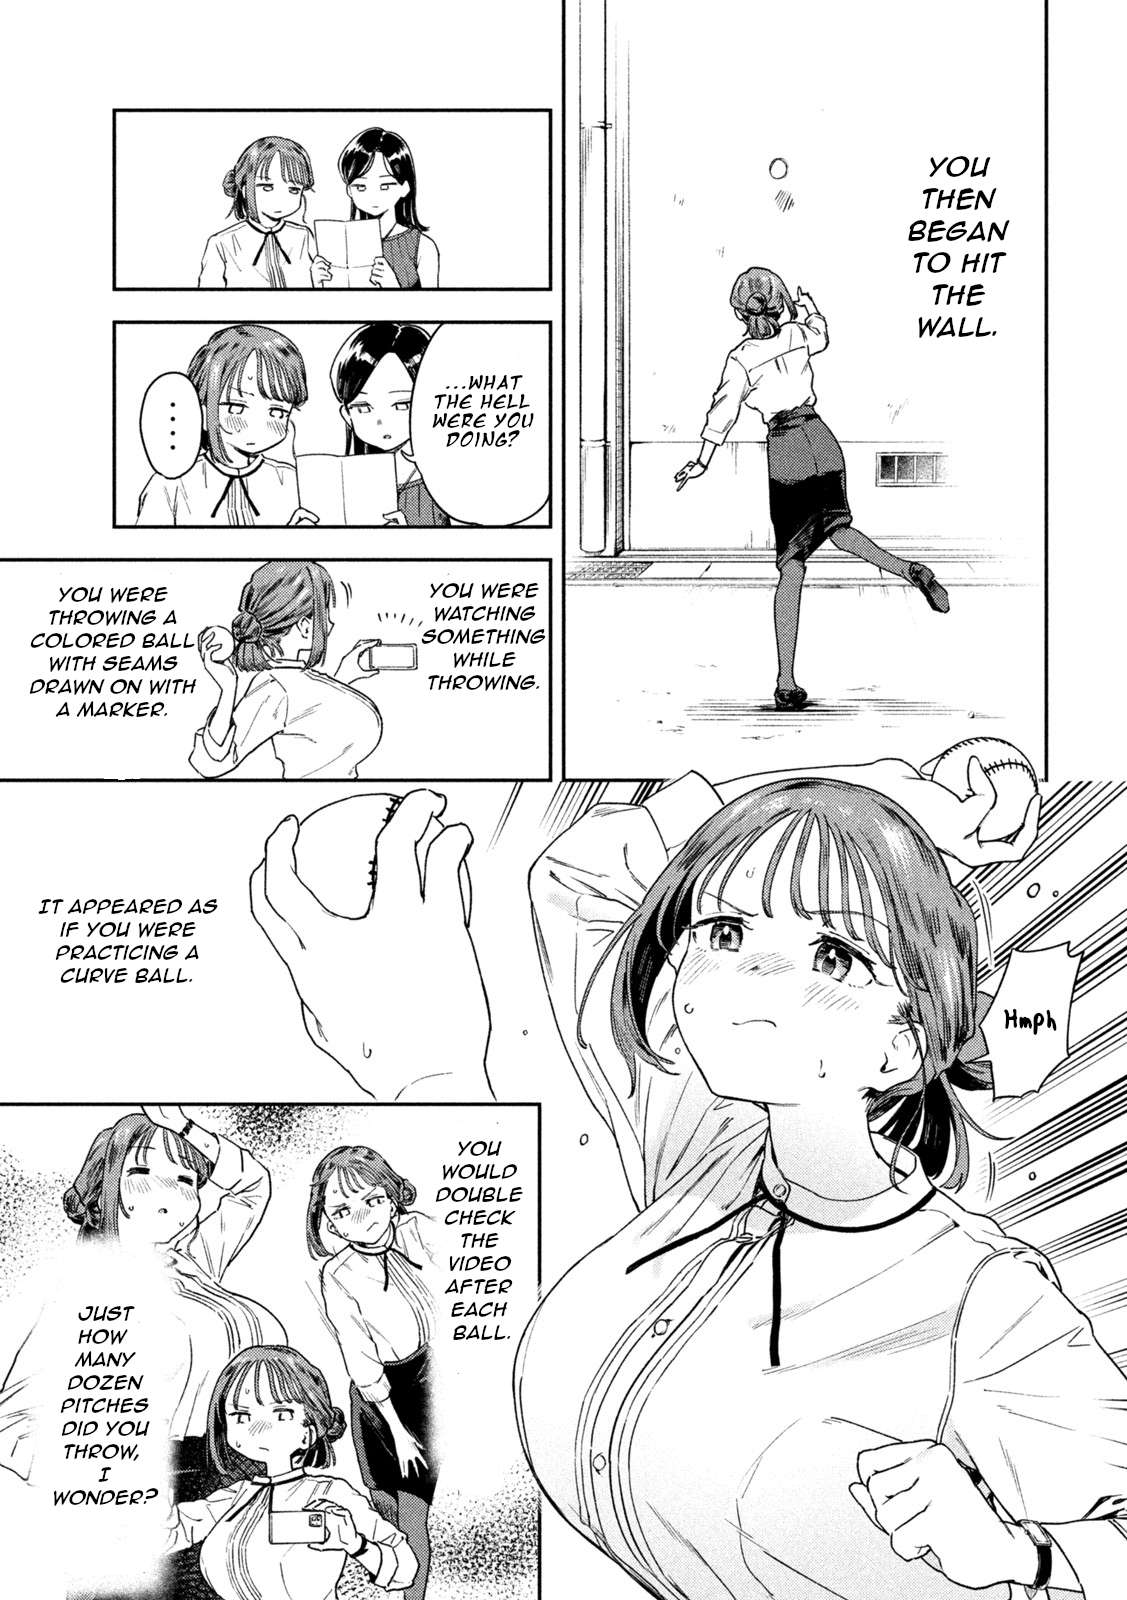 Miyo-Chan Sensei Said So - chapter 5 - #5